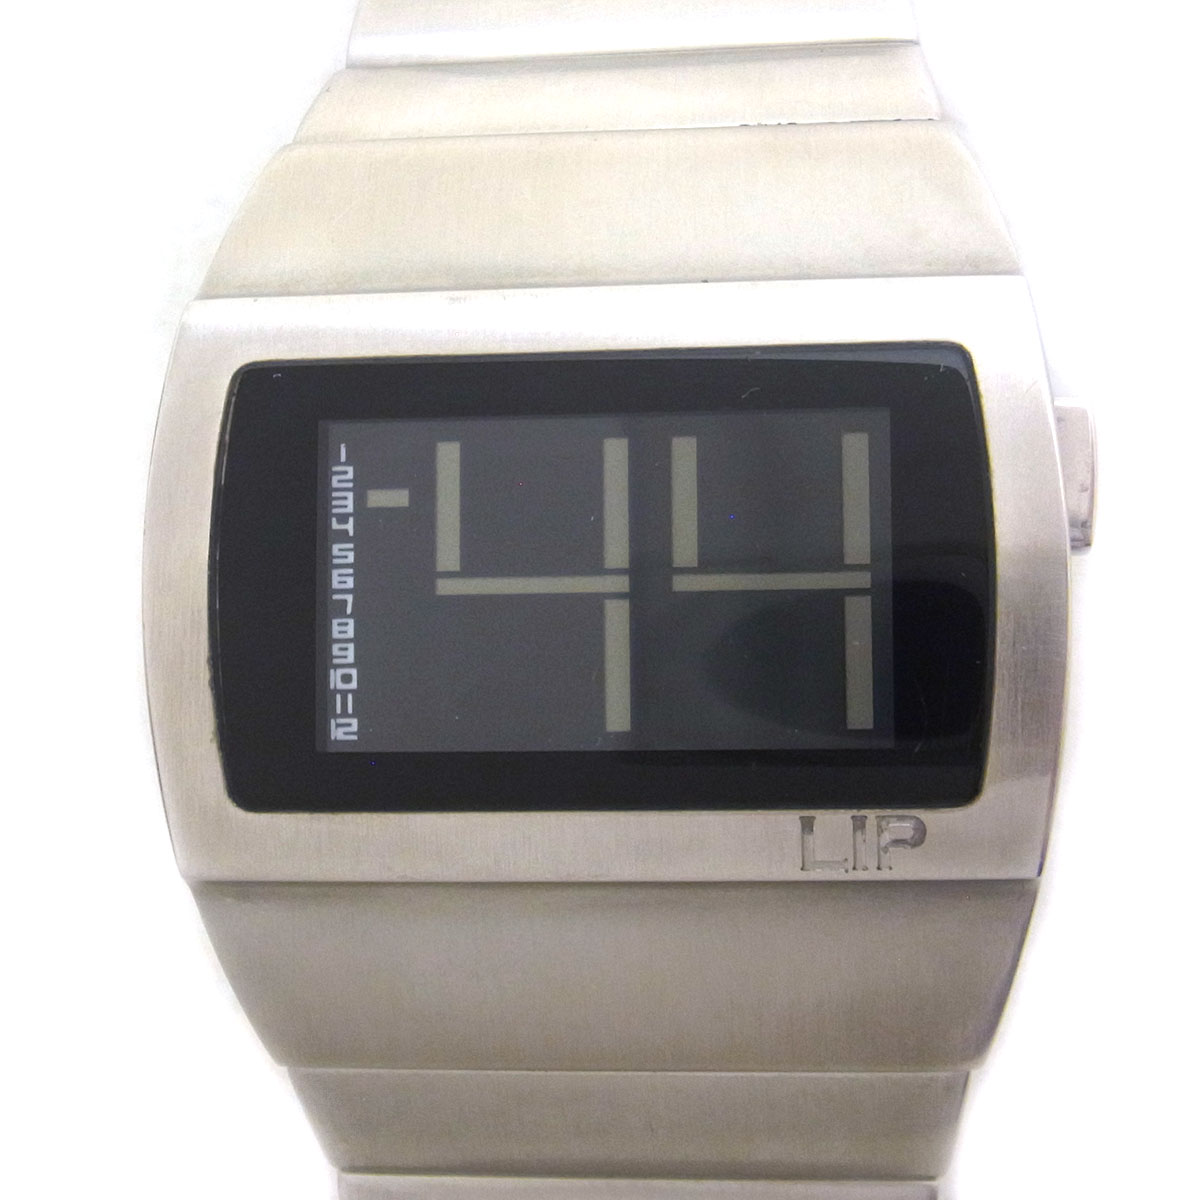 LIP デジタル腕時計 - 腕時計(デジタル)